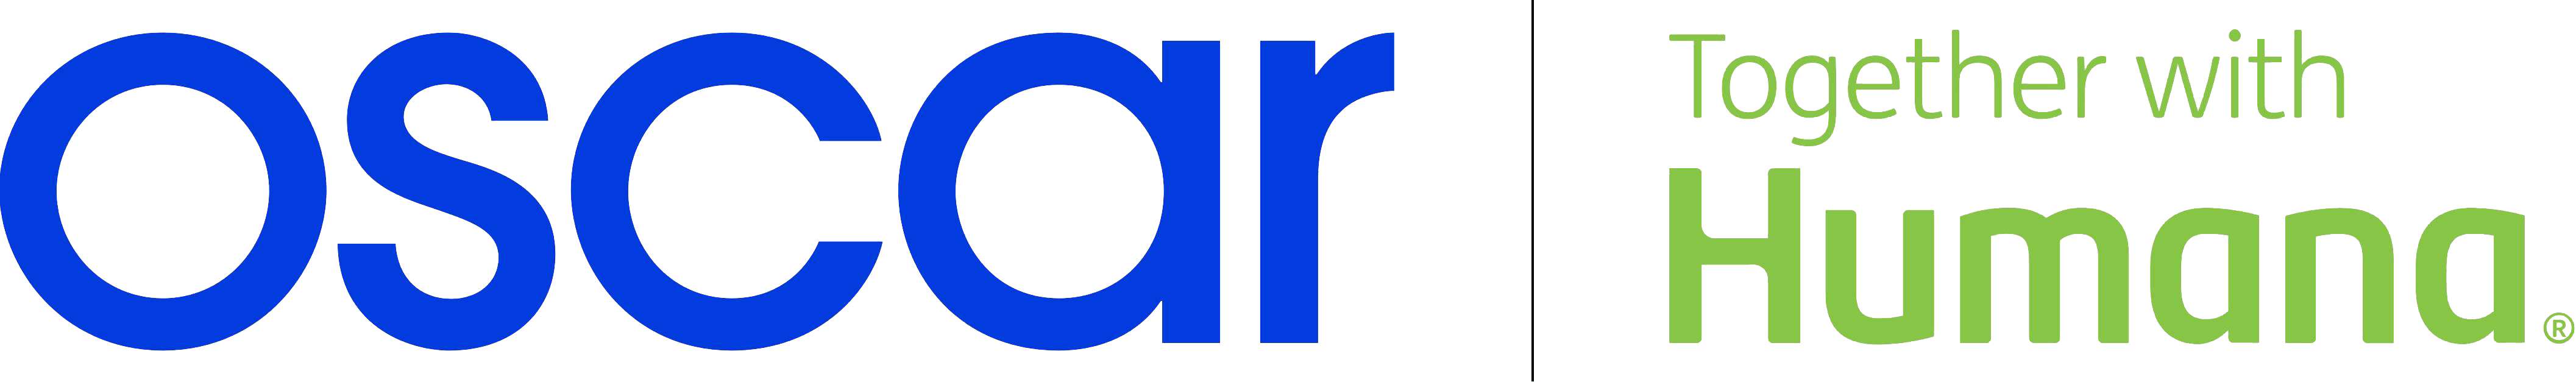 Oscar Humana logo